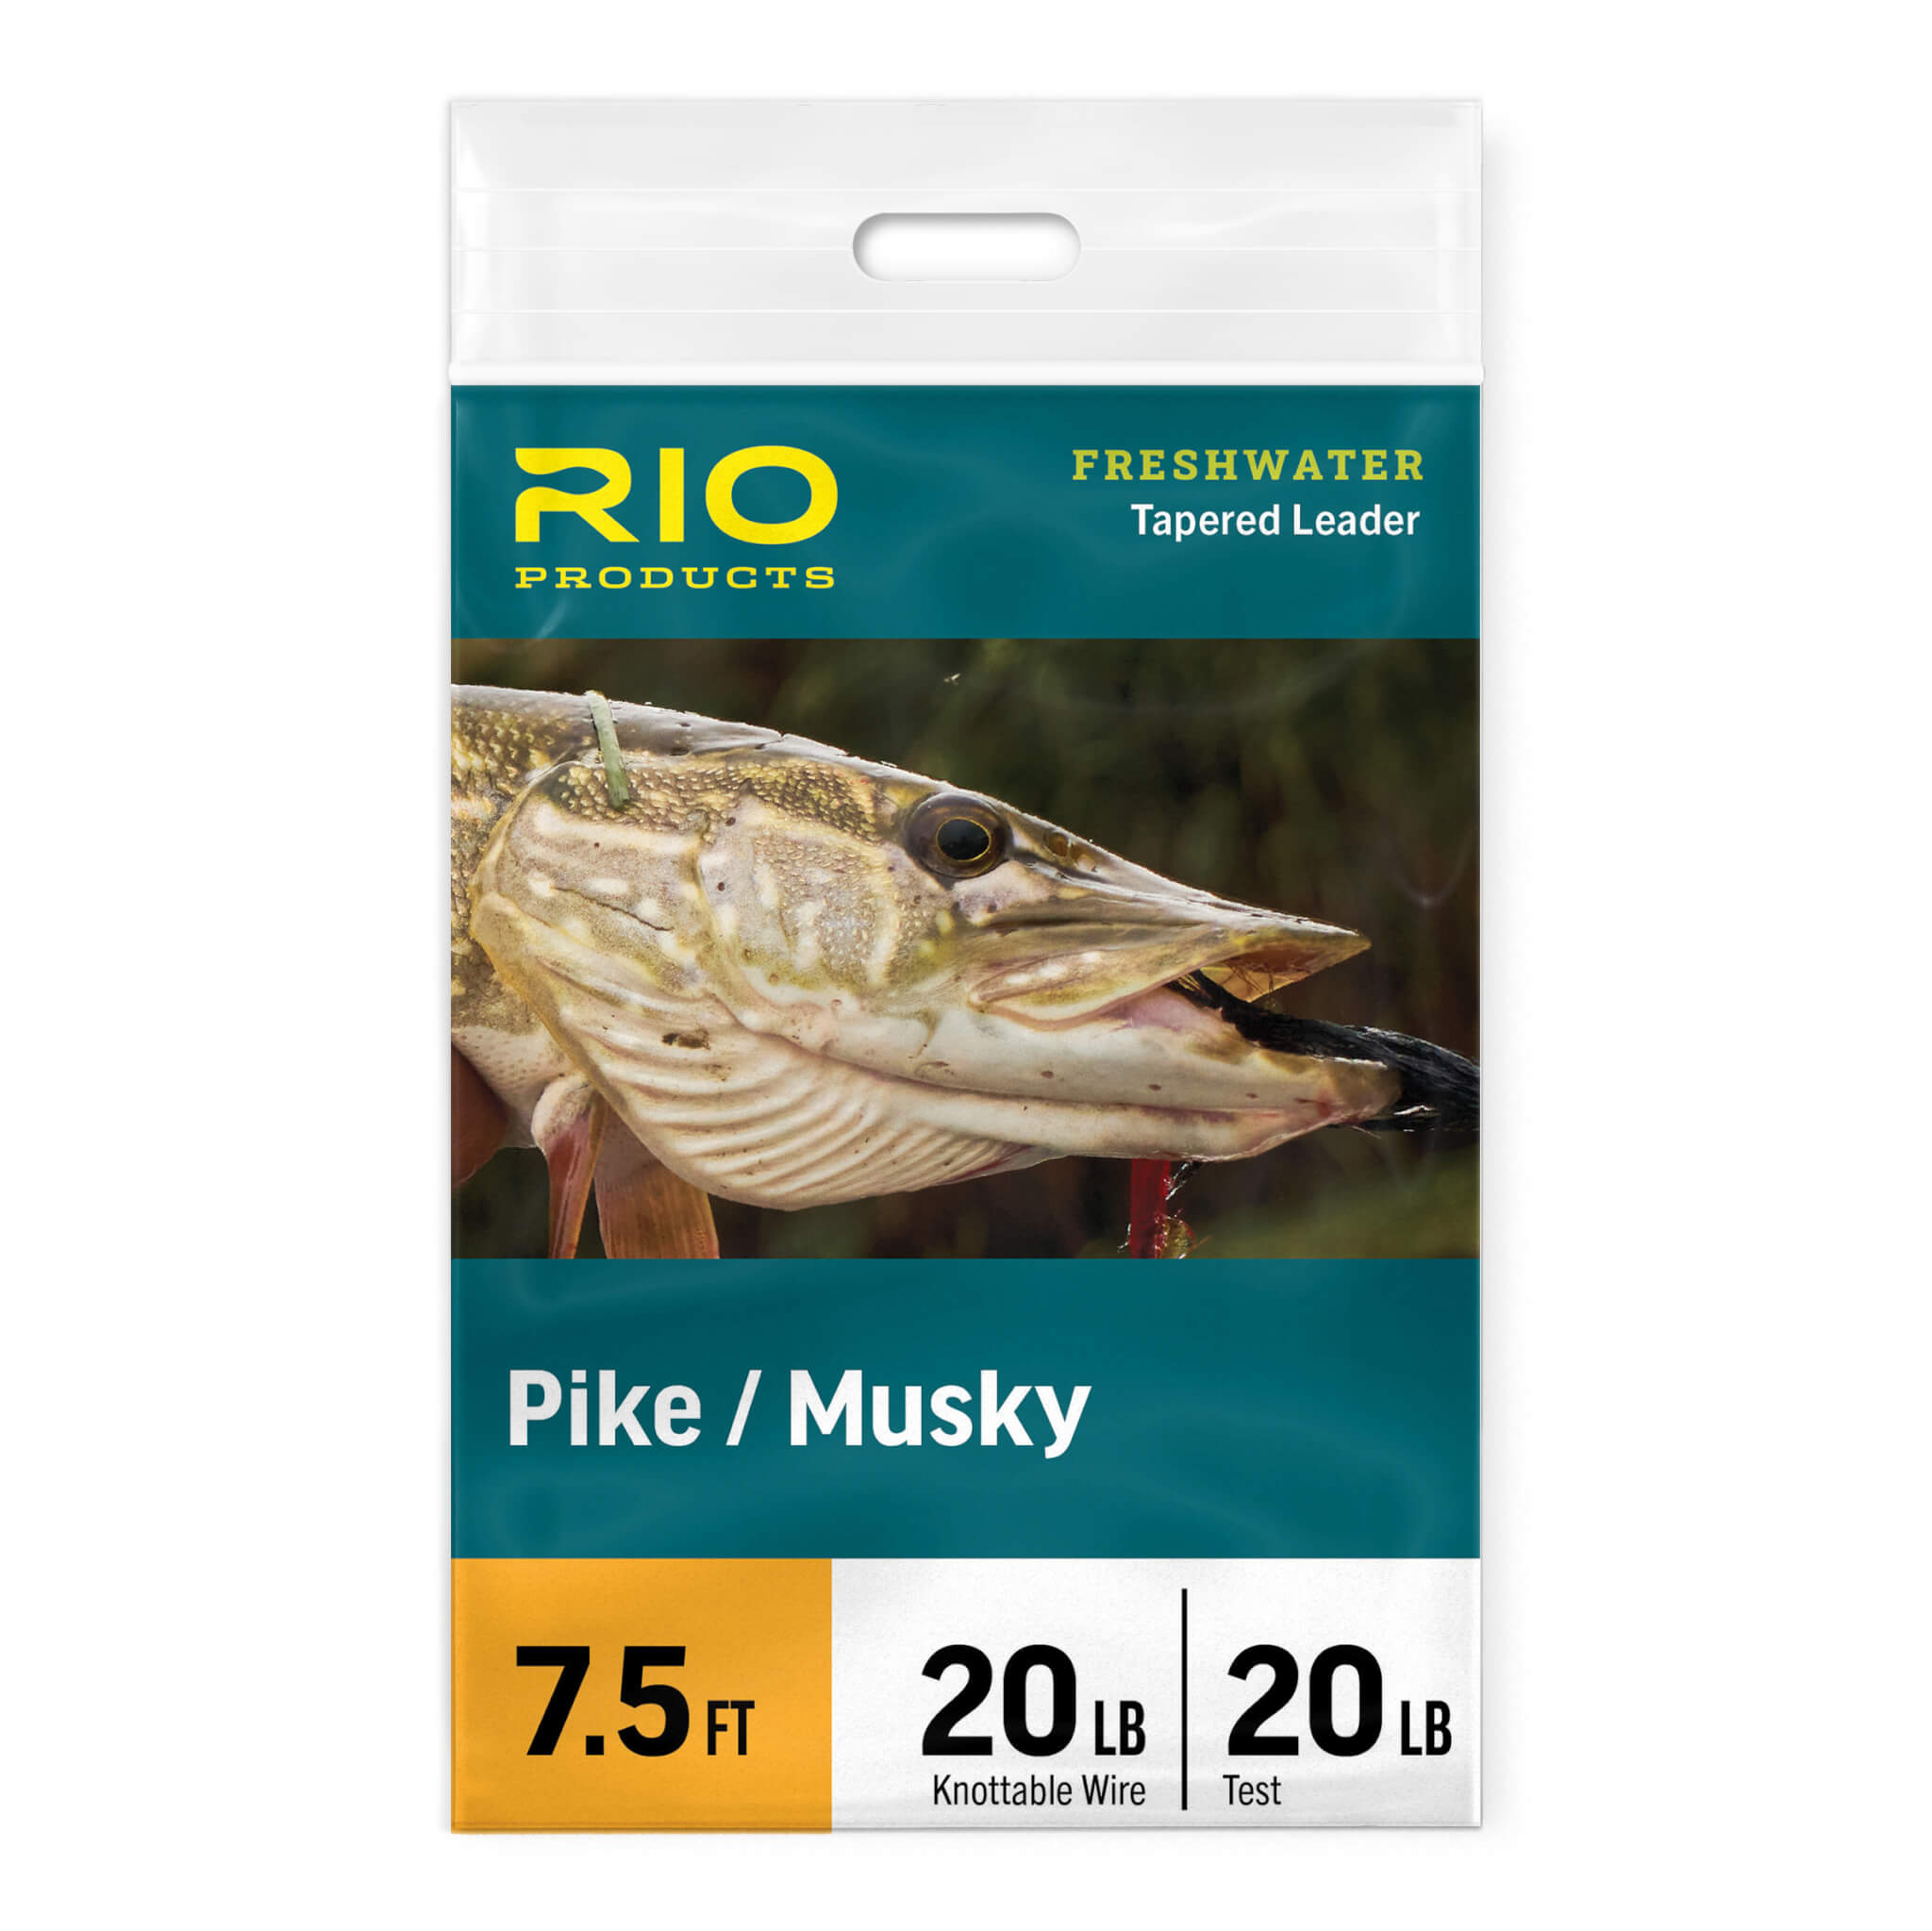 RIO PIKE/MUSKY LEADER – Guide Flyfishing, Fly Fishing Rods, Reels, Sage, Redington, RIO